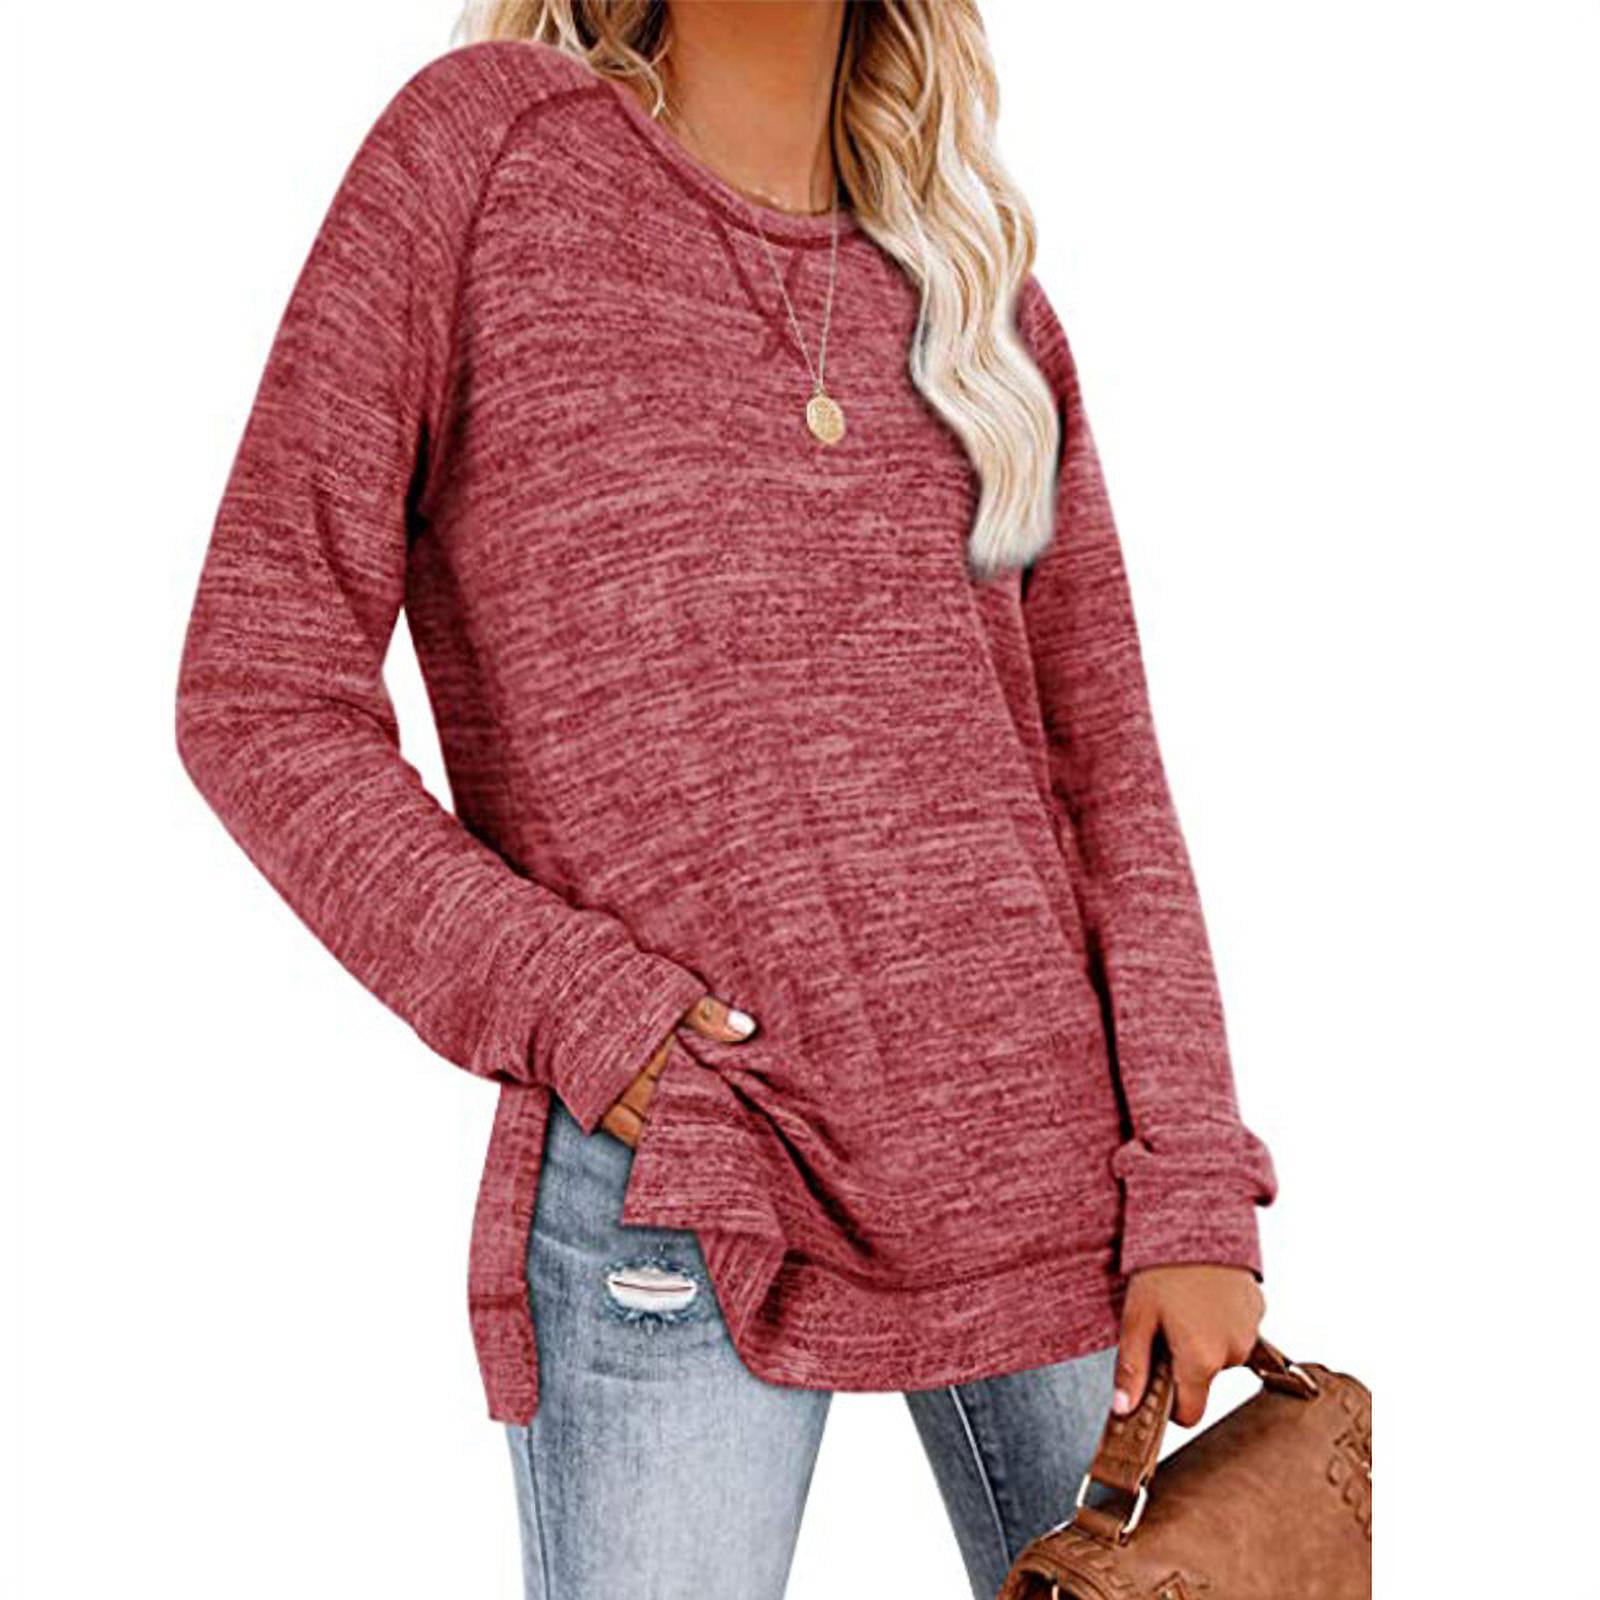 New Ladies Gypsy Sweatshirt Jumper Top Pullover Sweater Waist Tops 8-14 